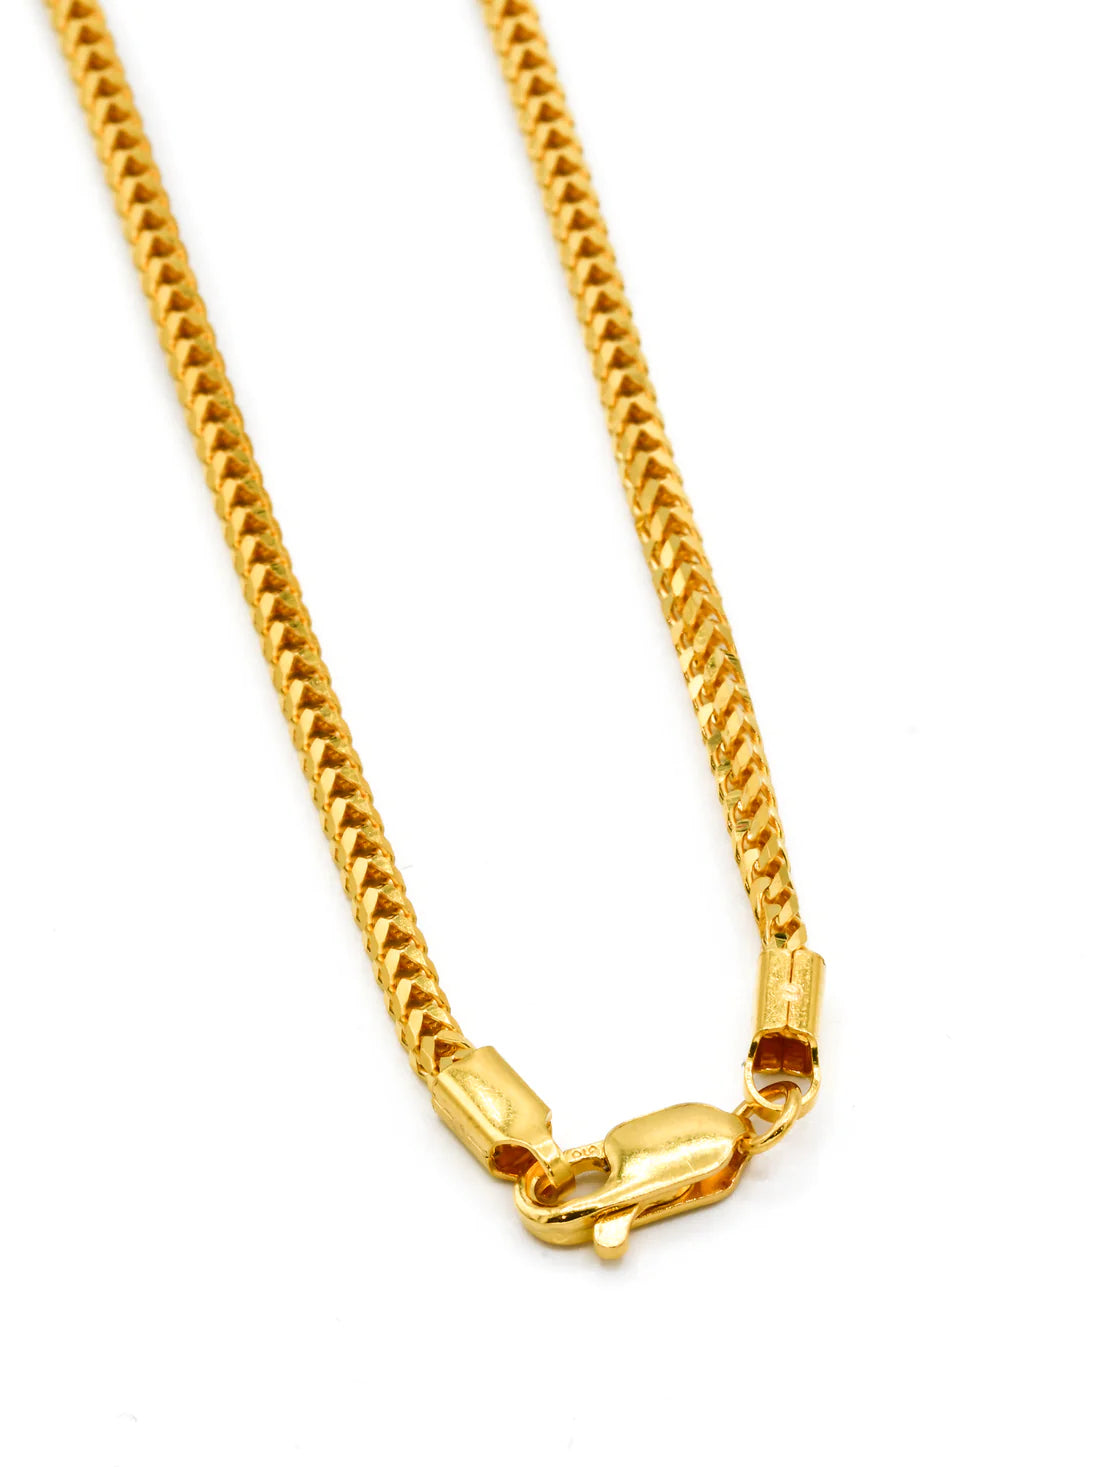 22ct Gold Fox Tail Chain - 55cm - Roop Darshan